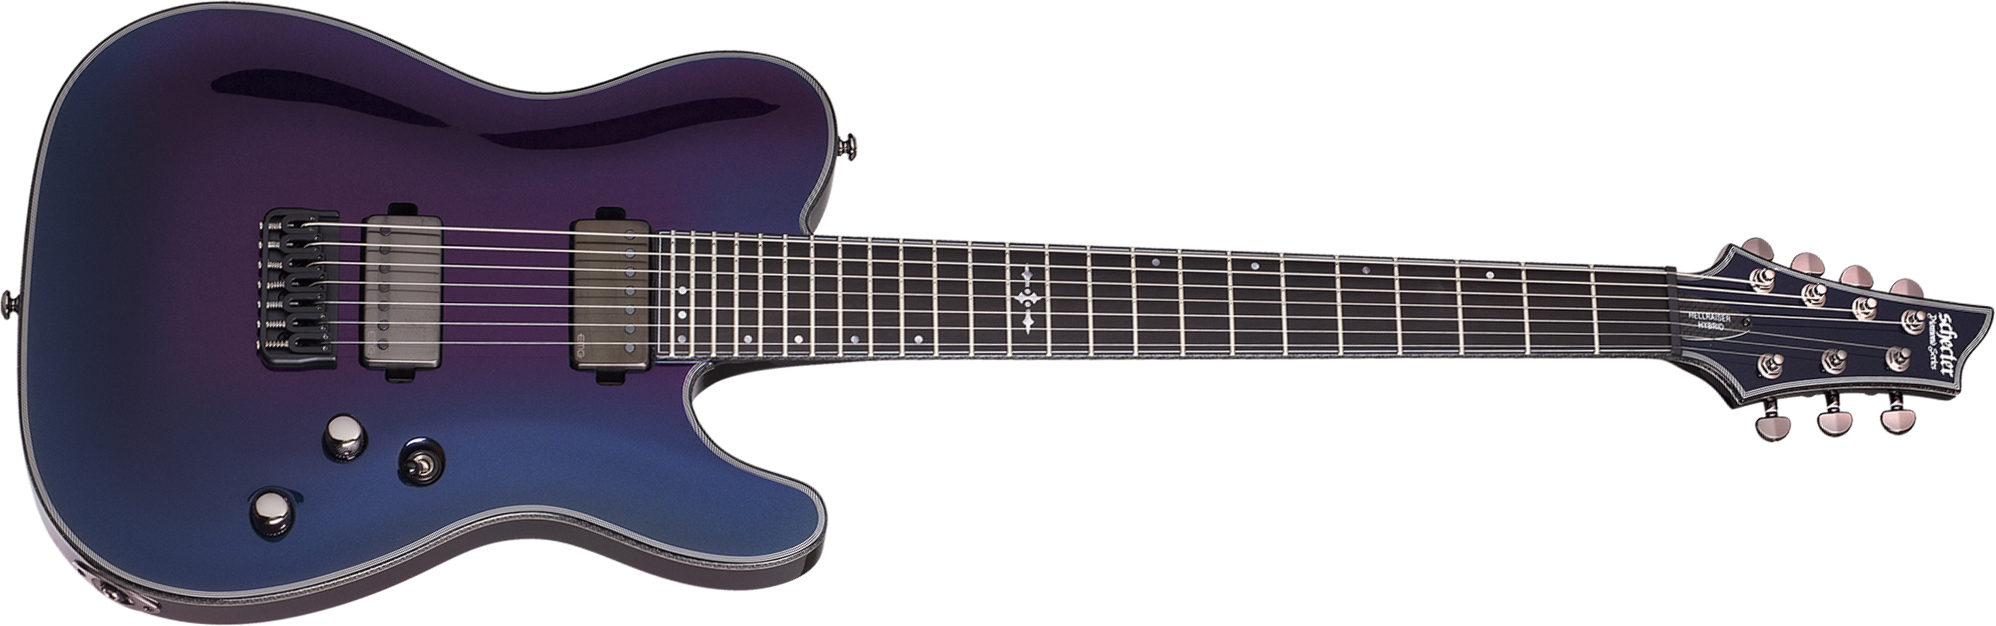 Schecter Pt-7 Hellraiser Hybrid 7c 2h Emg Ht Eb - Ultraviolet - Guitarra eléctrica de 7 cuerdas - Main picture